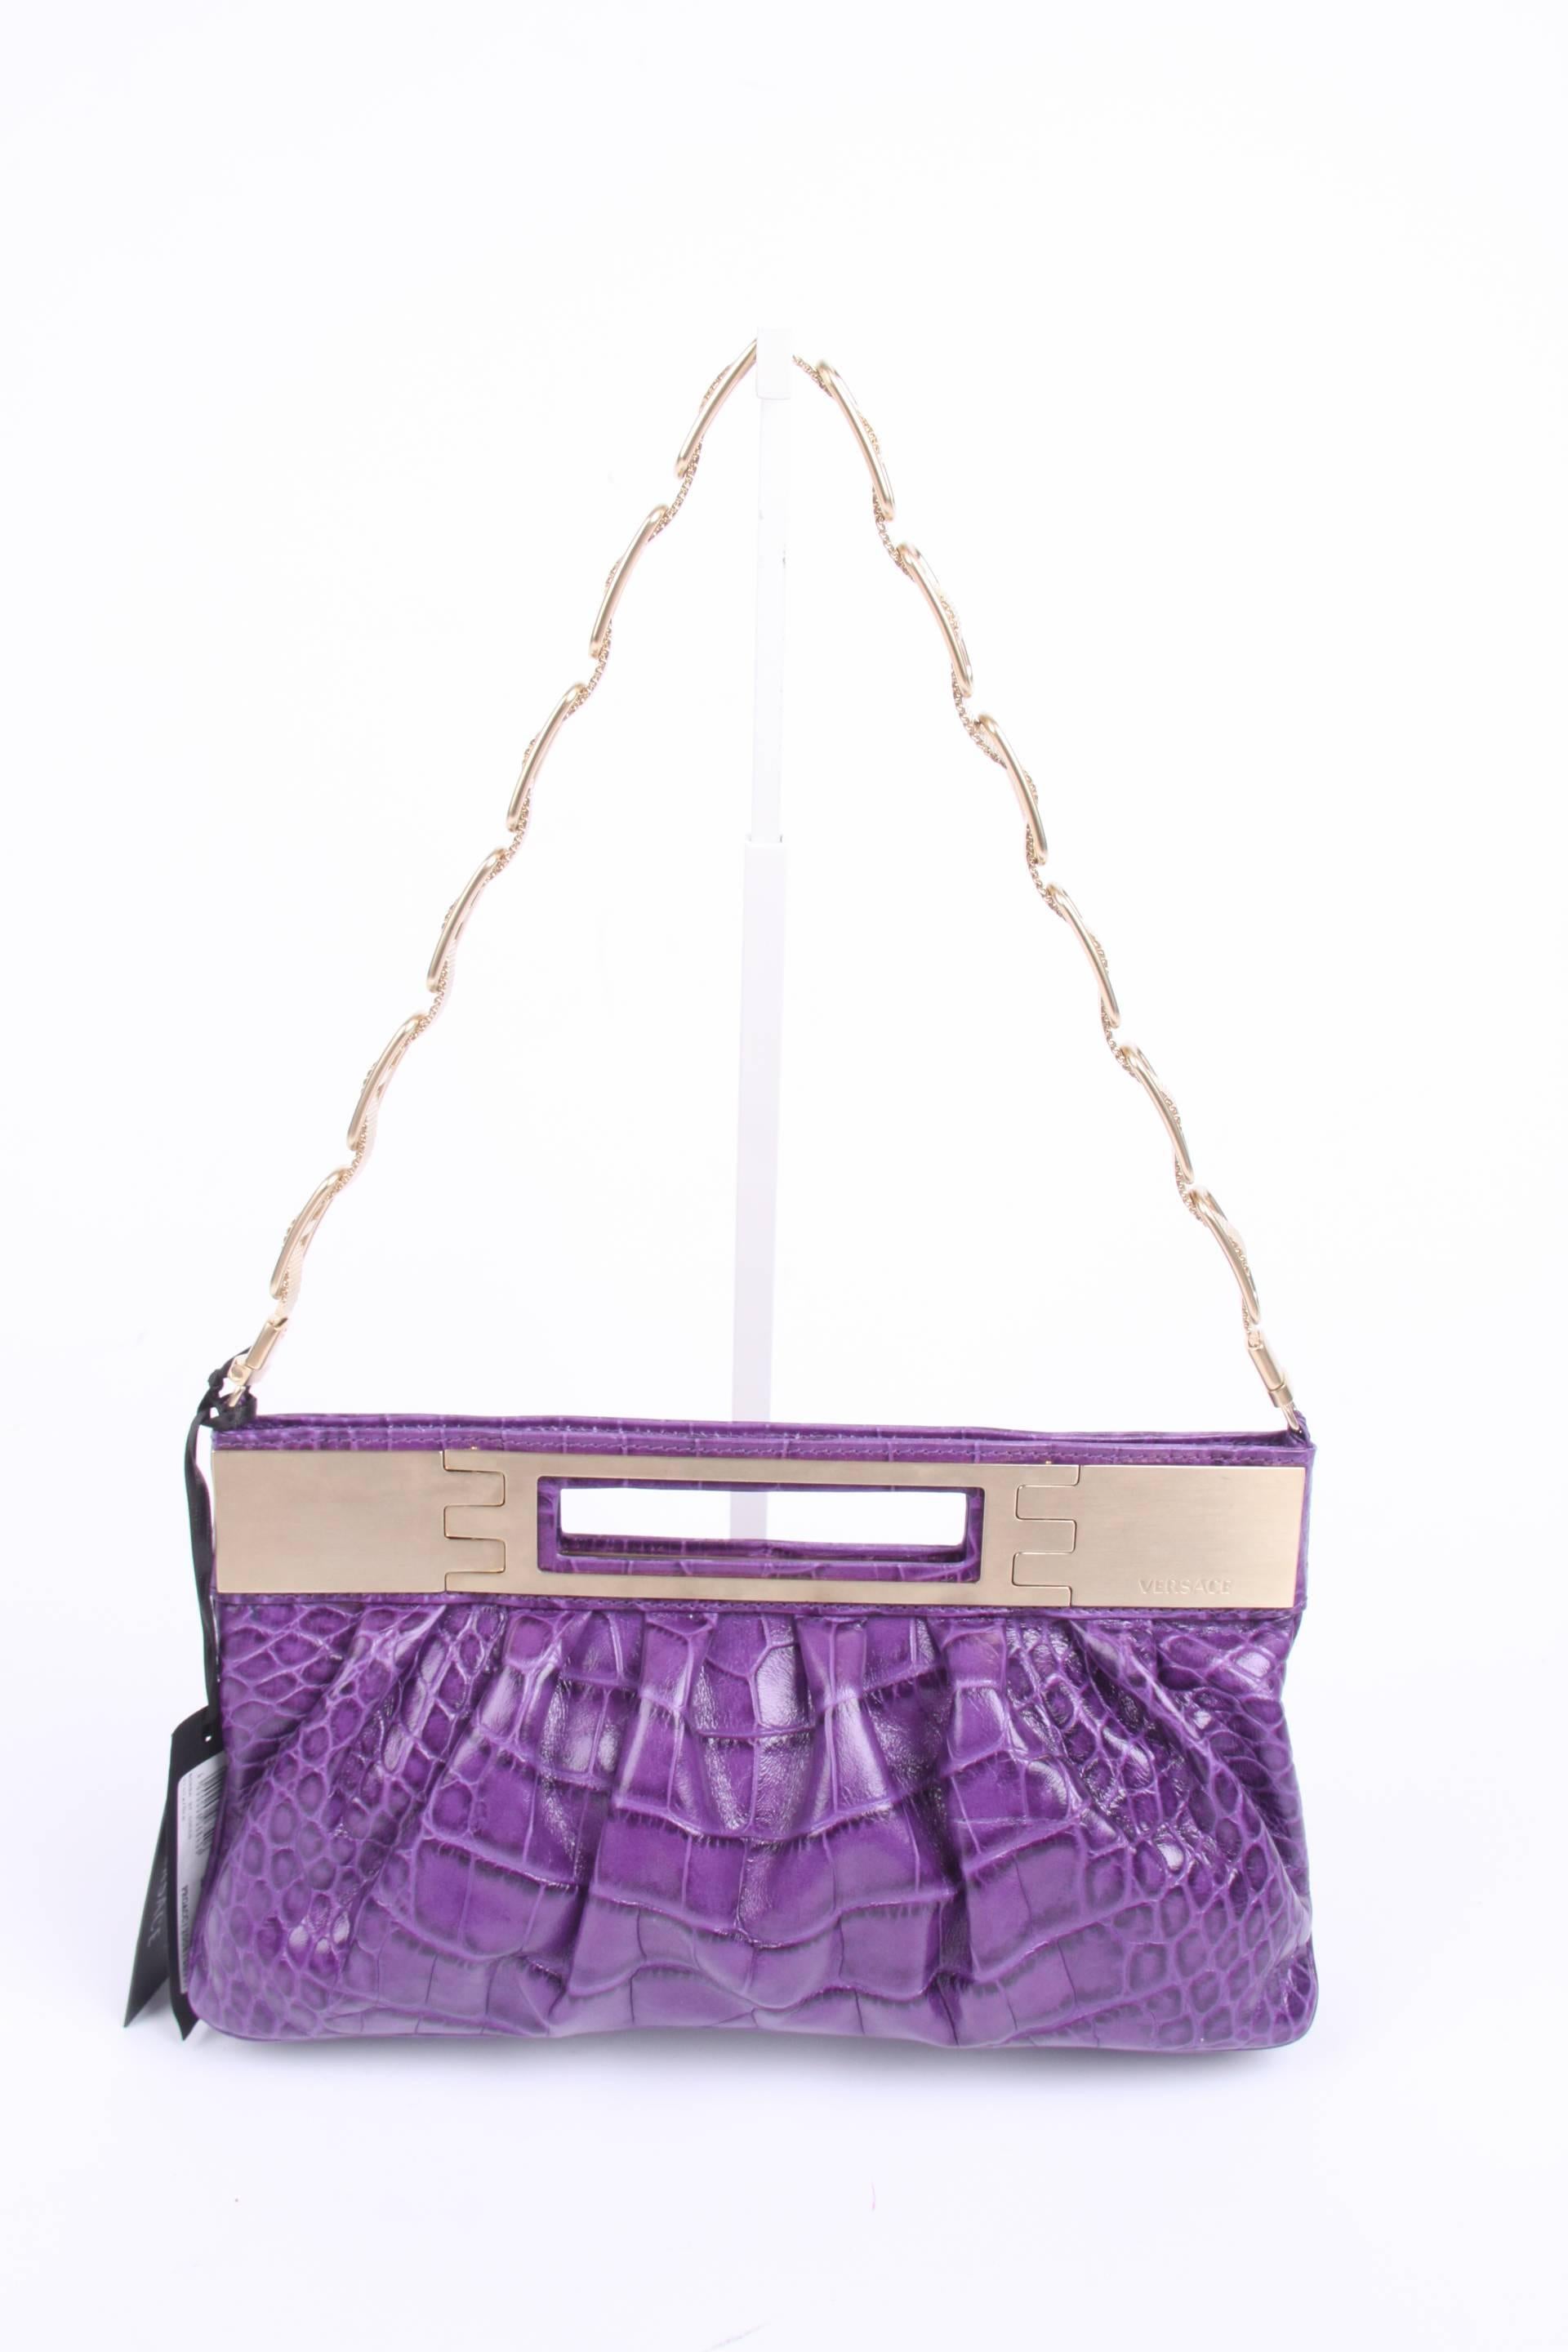 Versace Leather Clutch Croco Print - purple 2008 For Sale 1